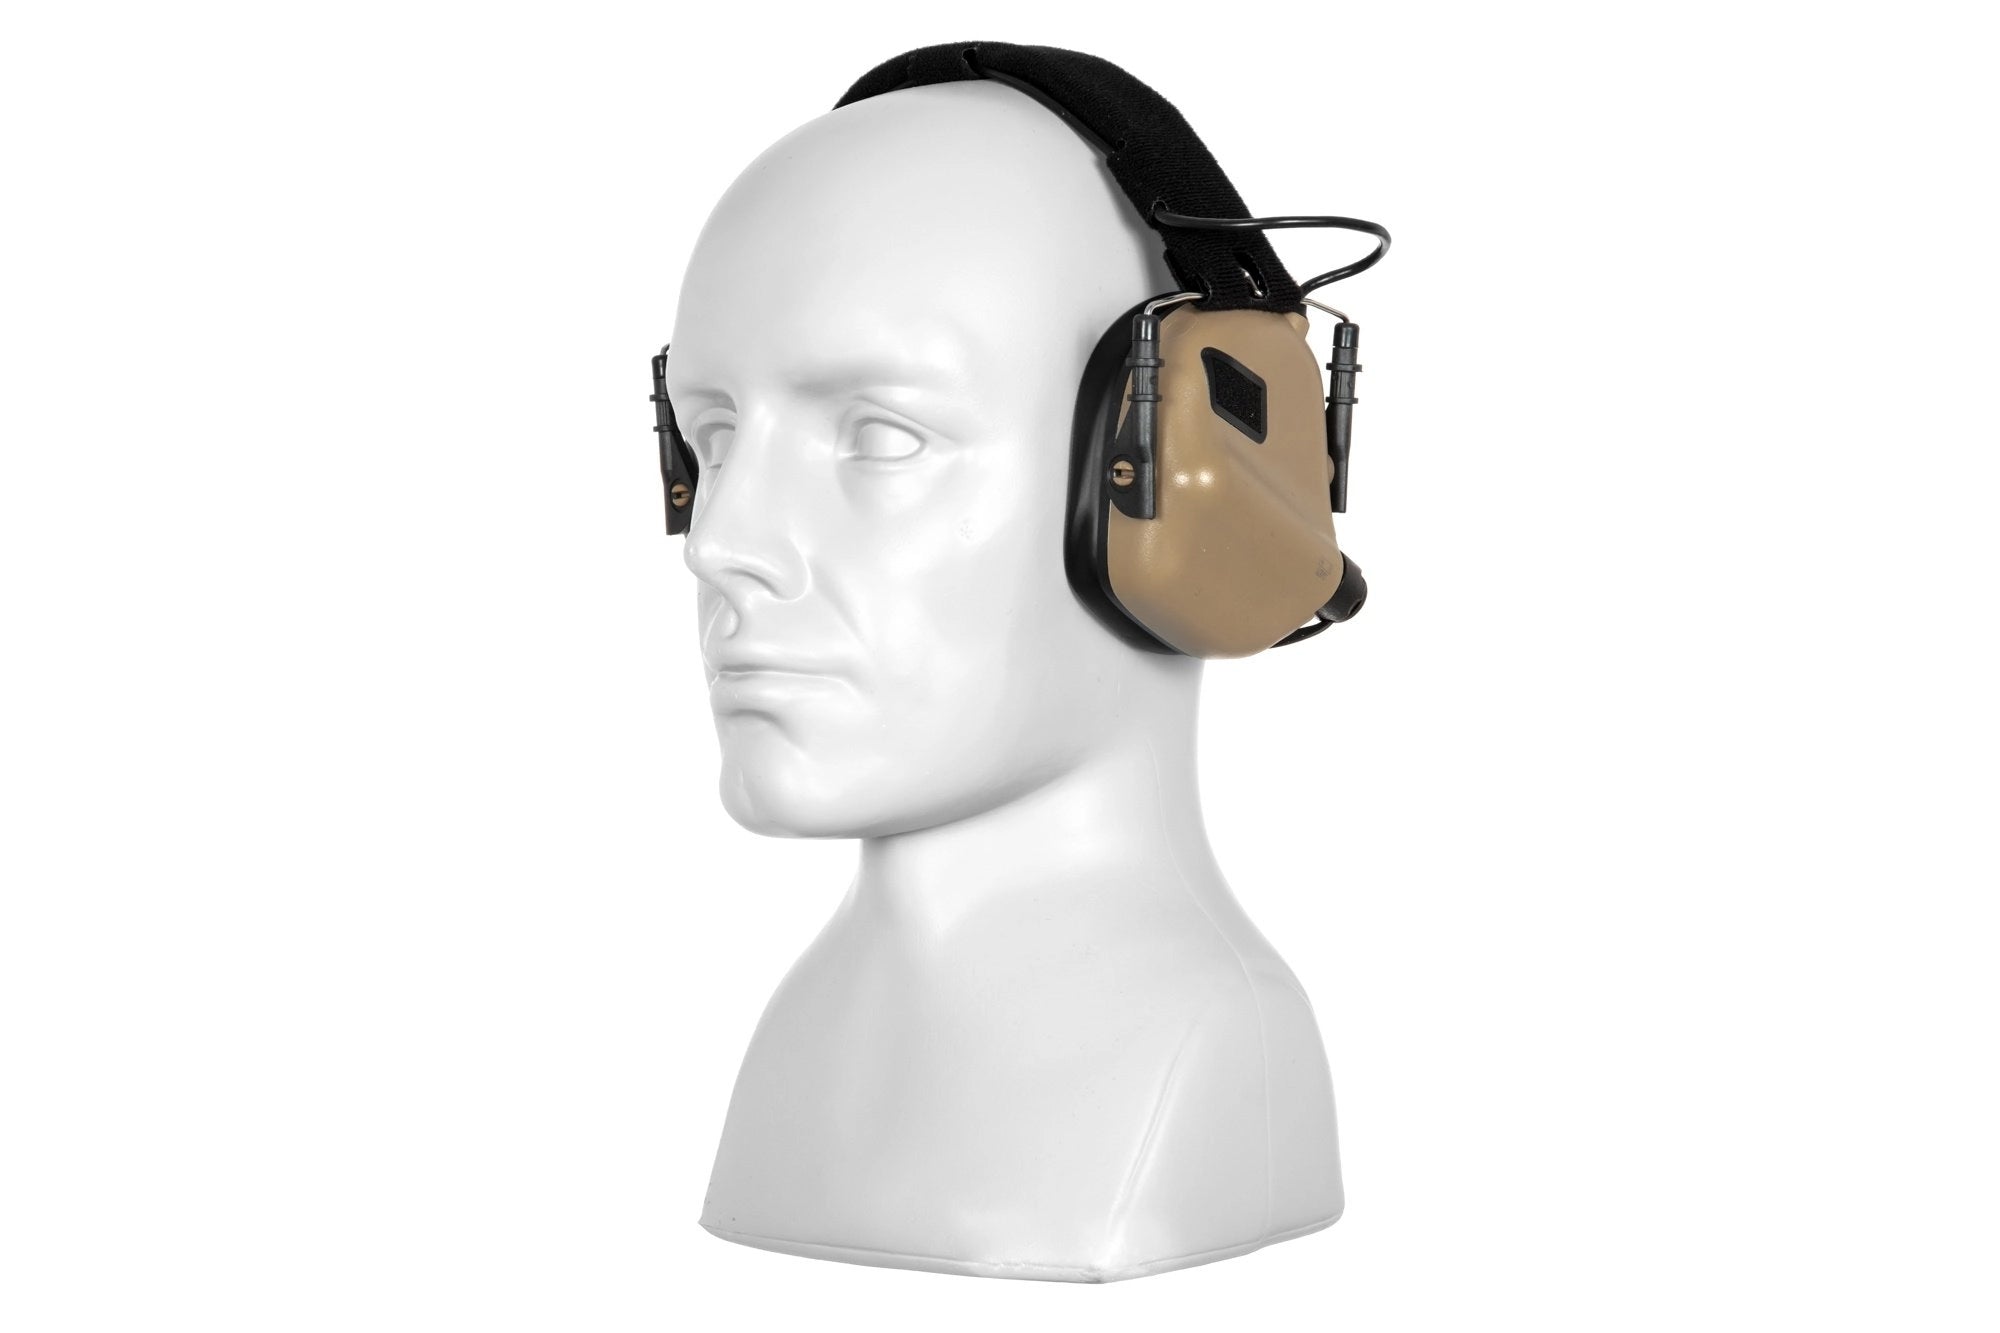 M31 Active Hearing Protectors - Tan